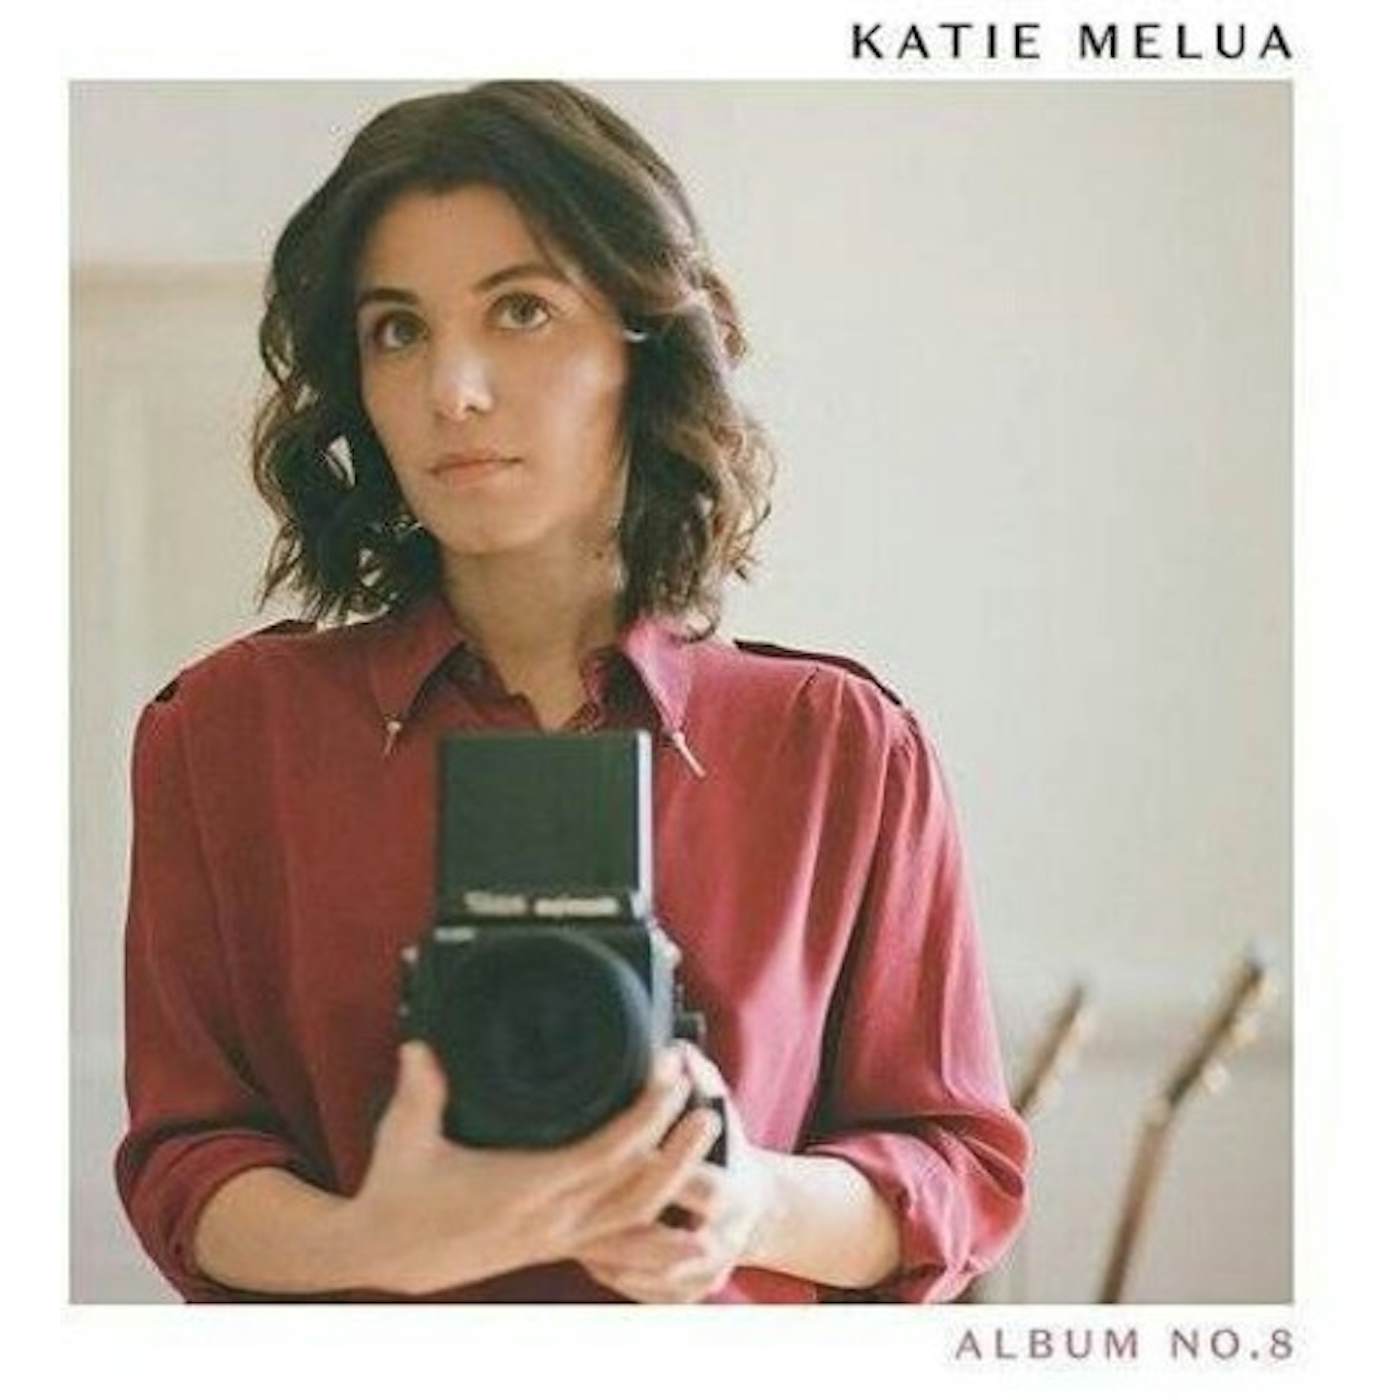 Katie Melua ALBUM NO. 8 CD